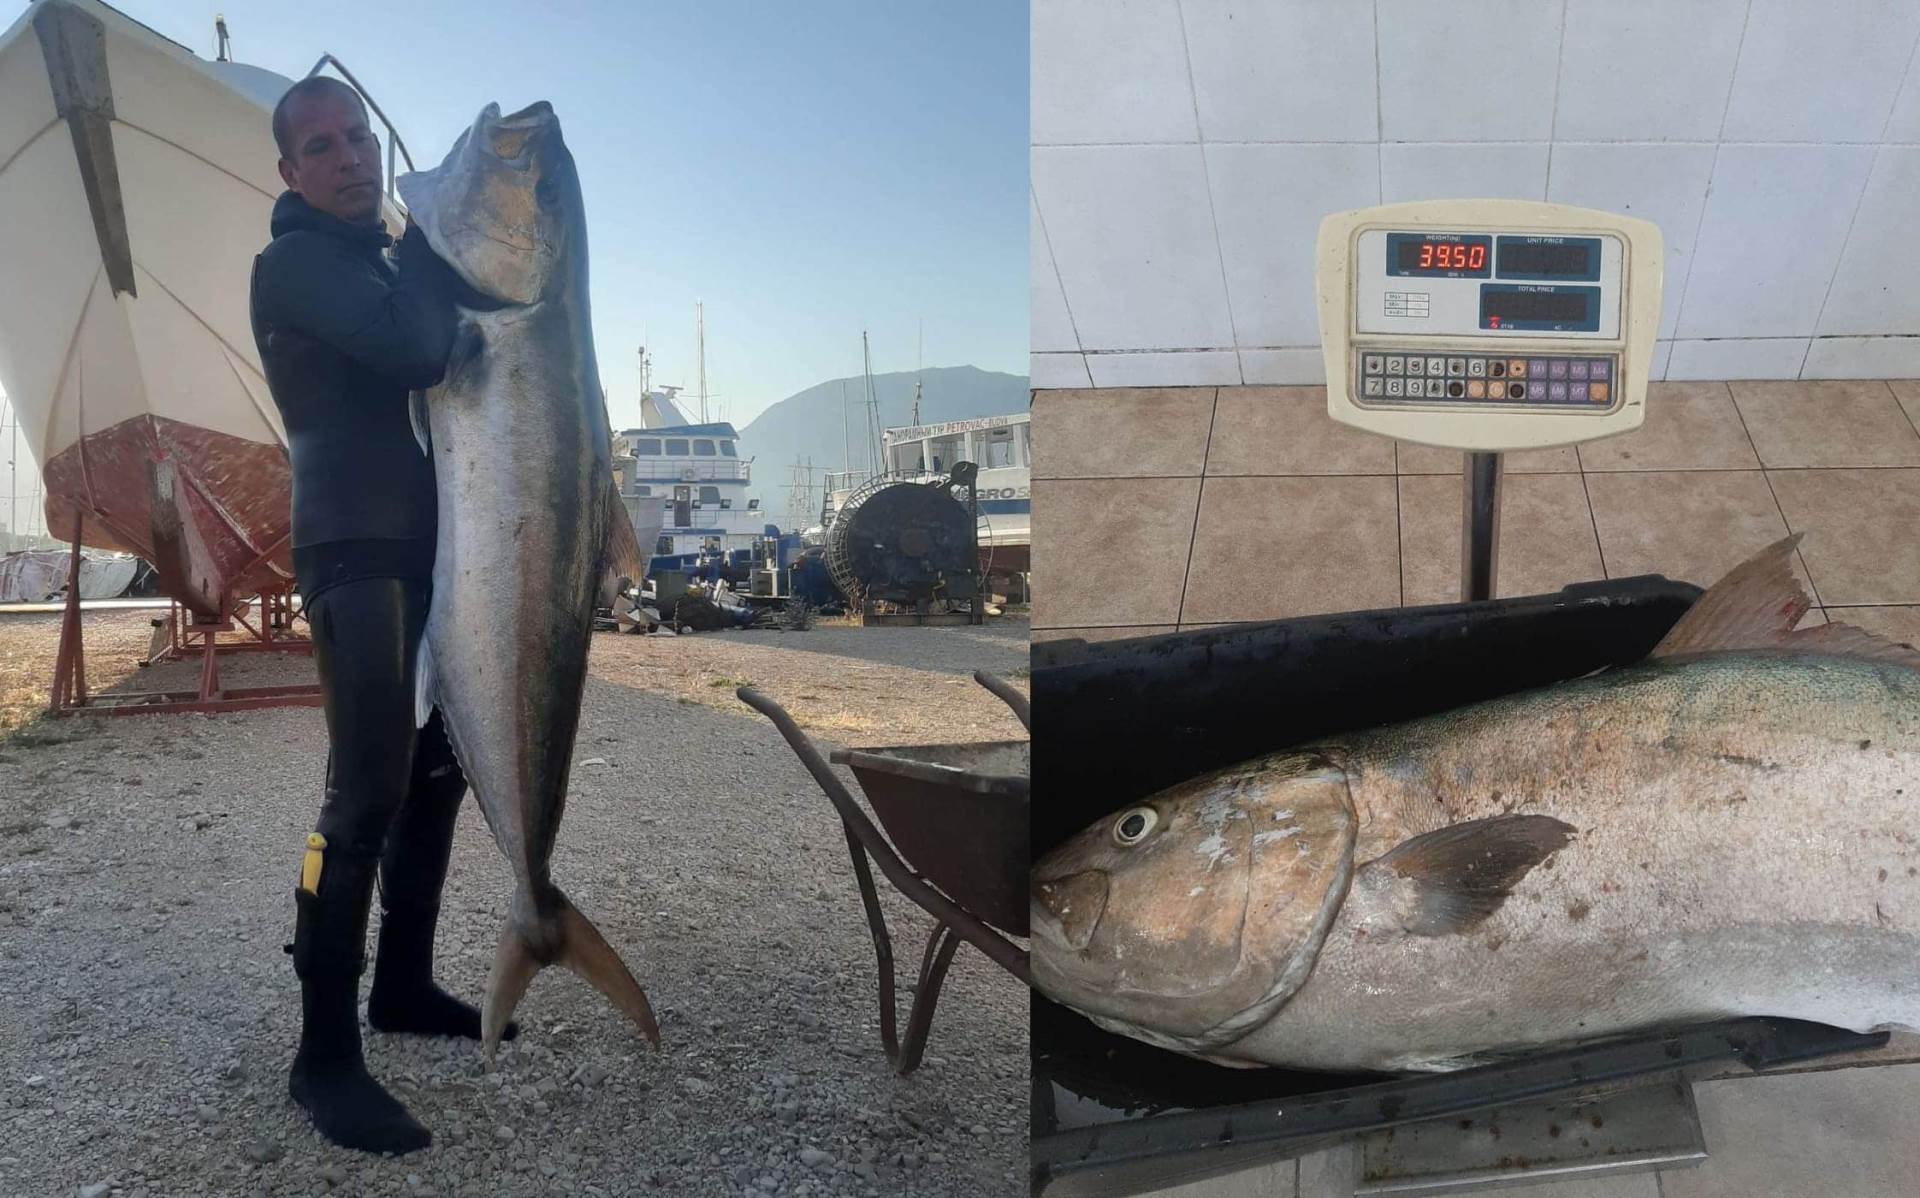  Ribolov - pecanje - ronilac iz Bara ulovio gofa od 40 kg 